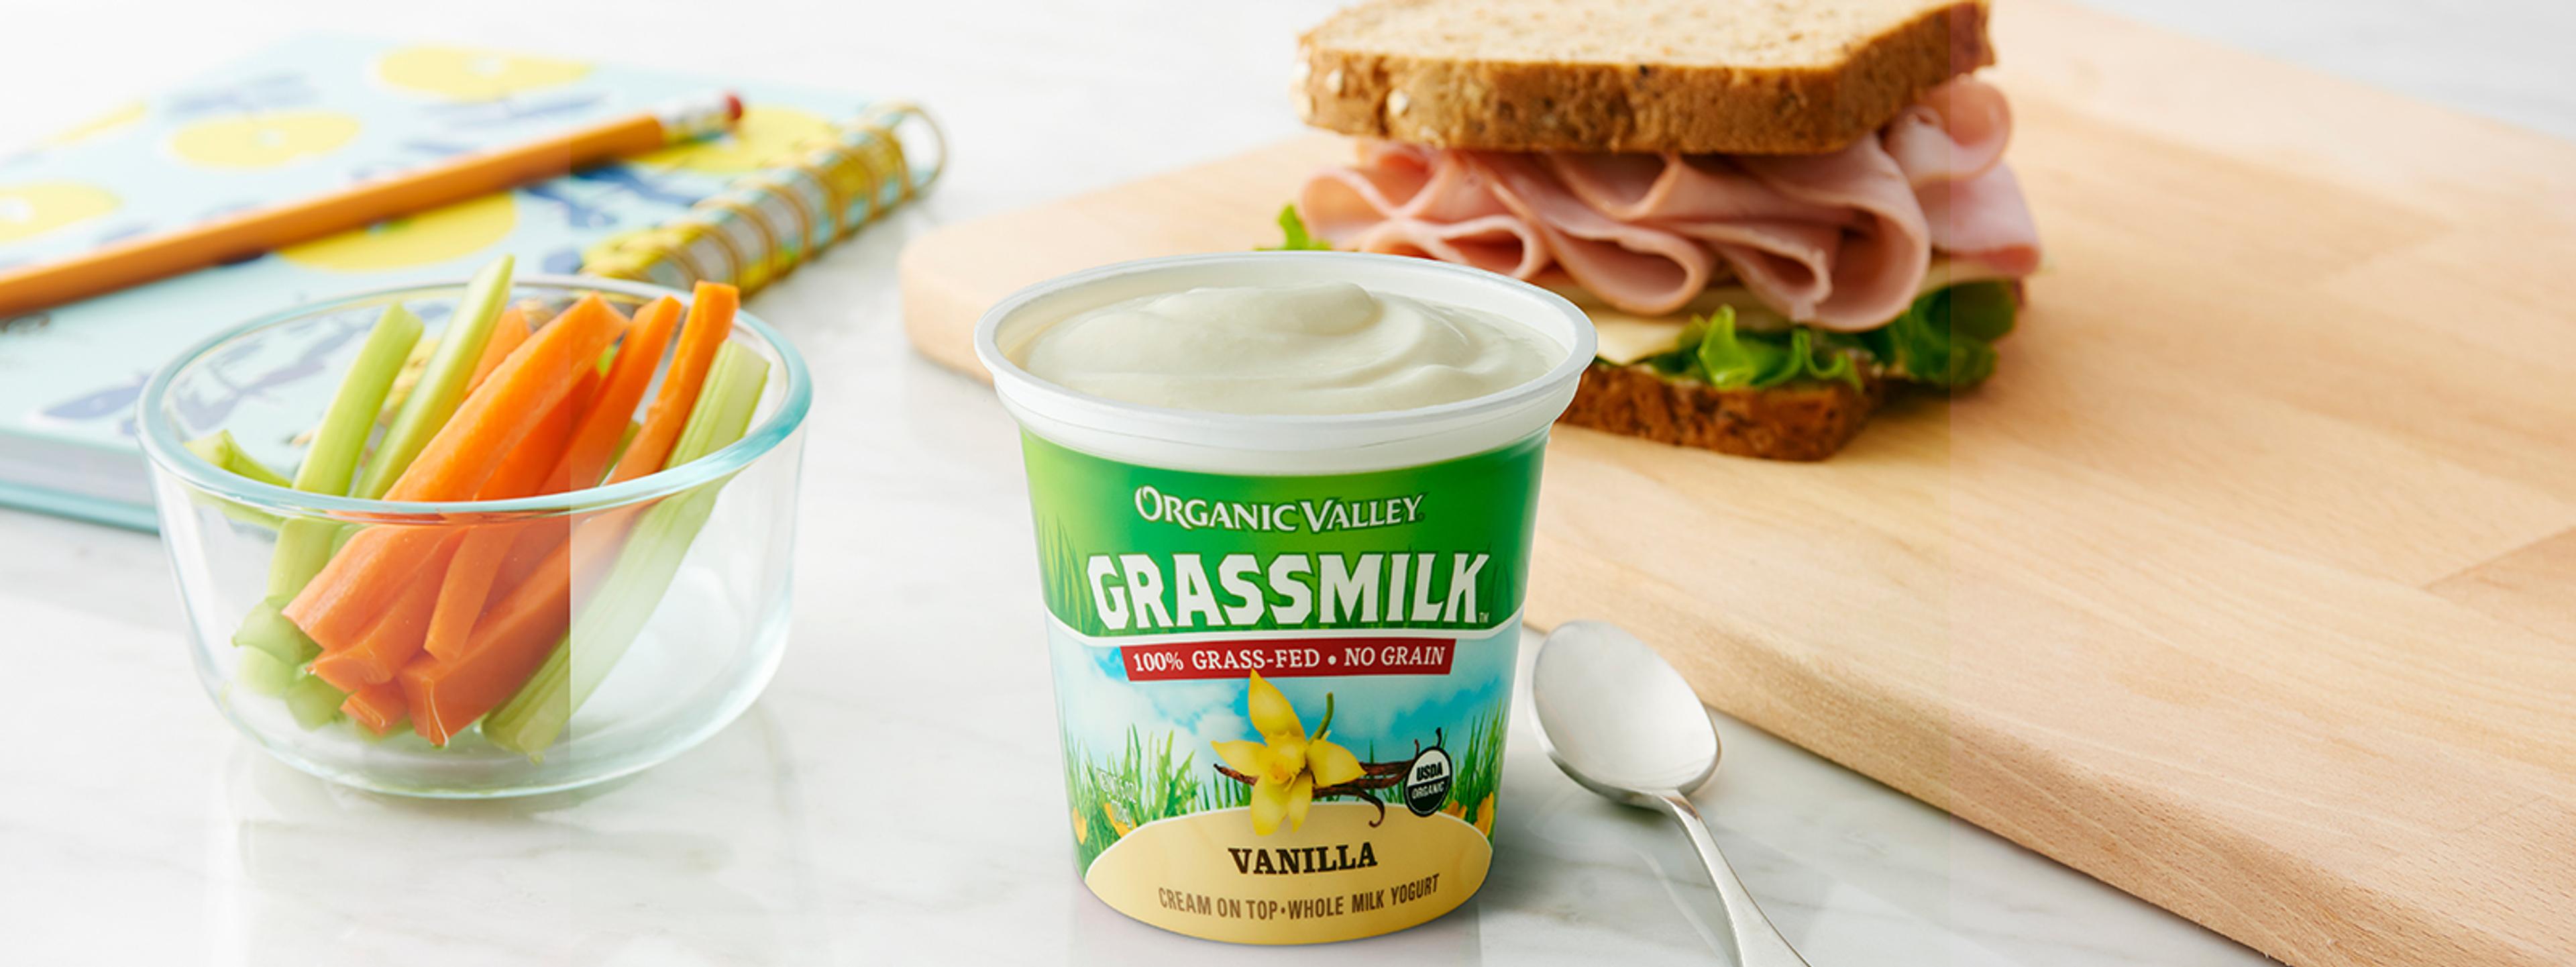 Organic Valley yogurt next to a deli meat sandwich